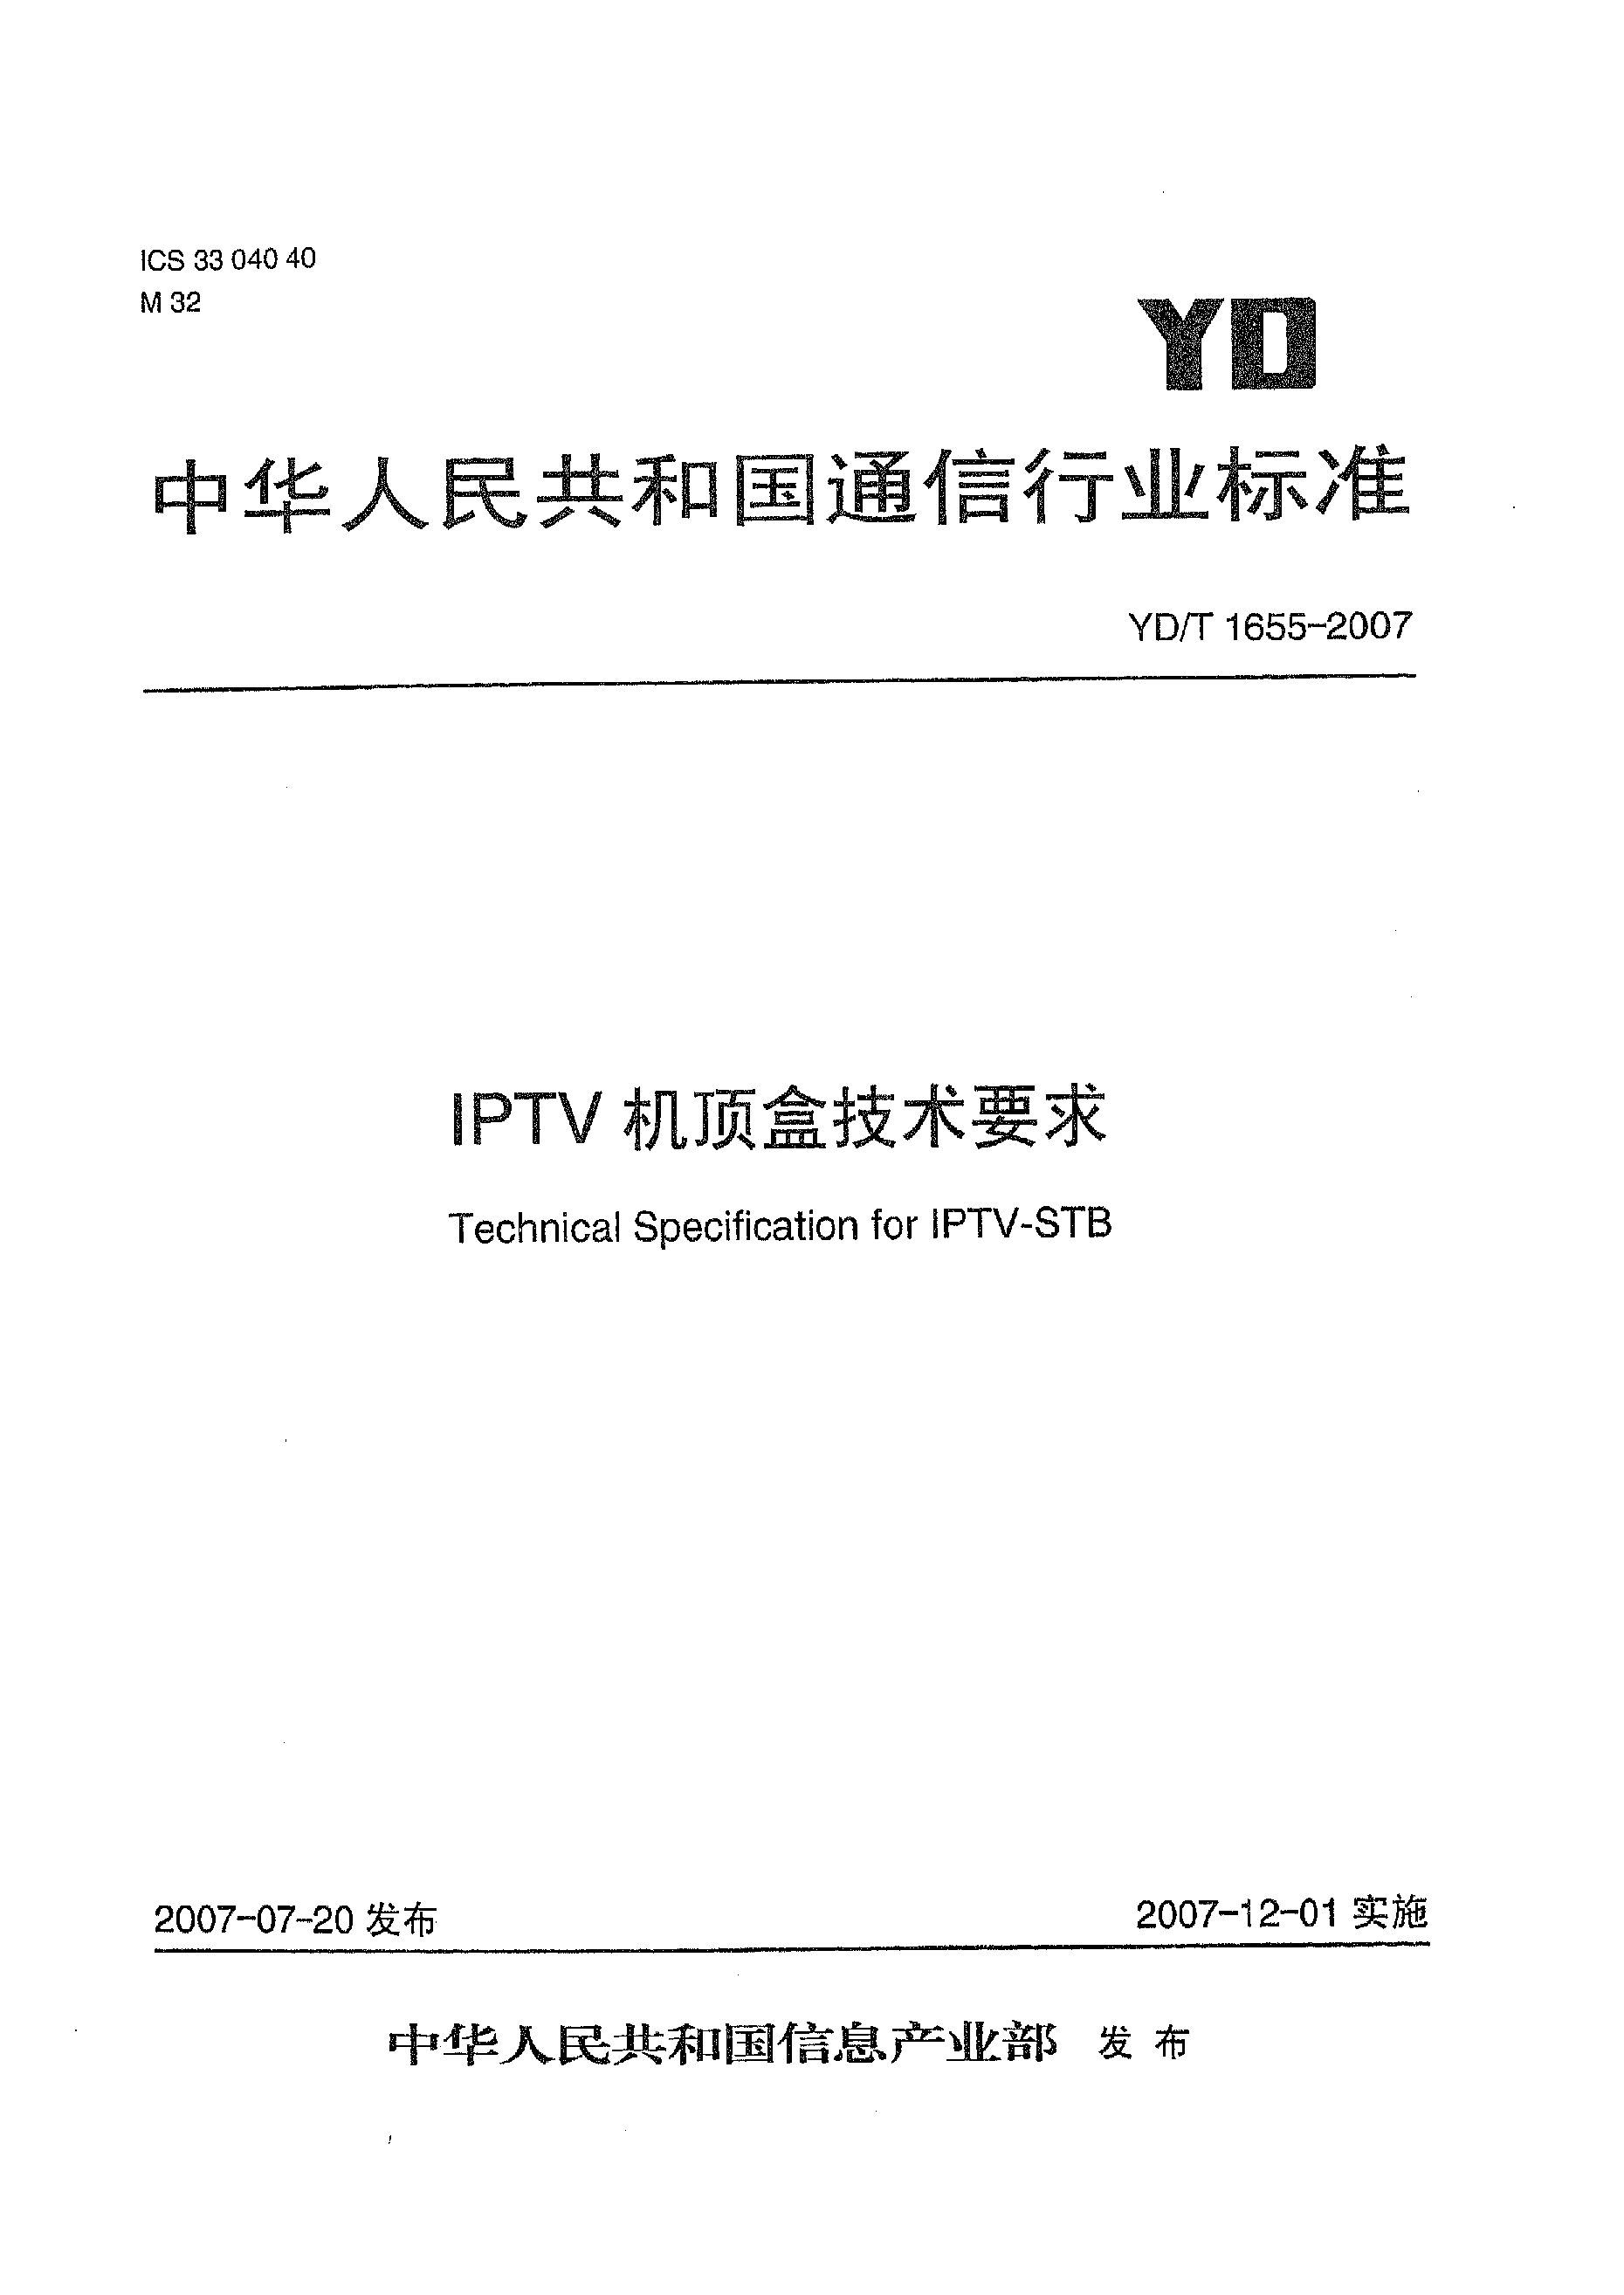 YD/T 1655-2007封面图